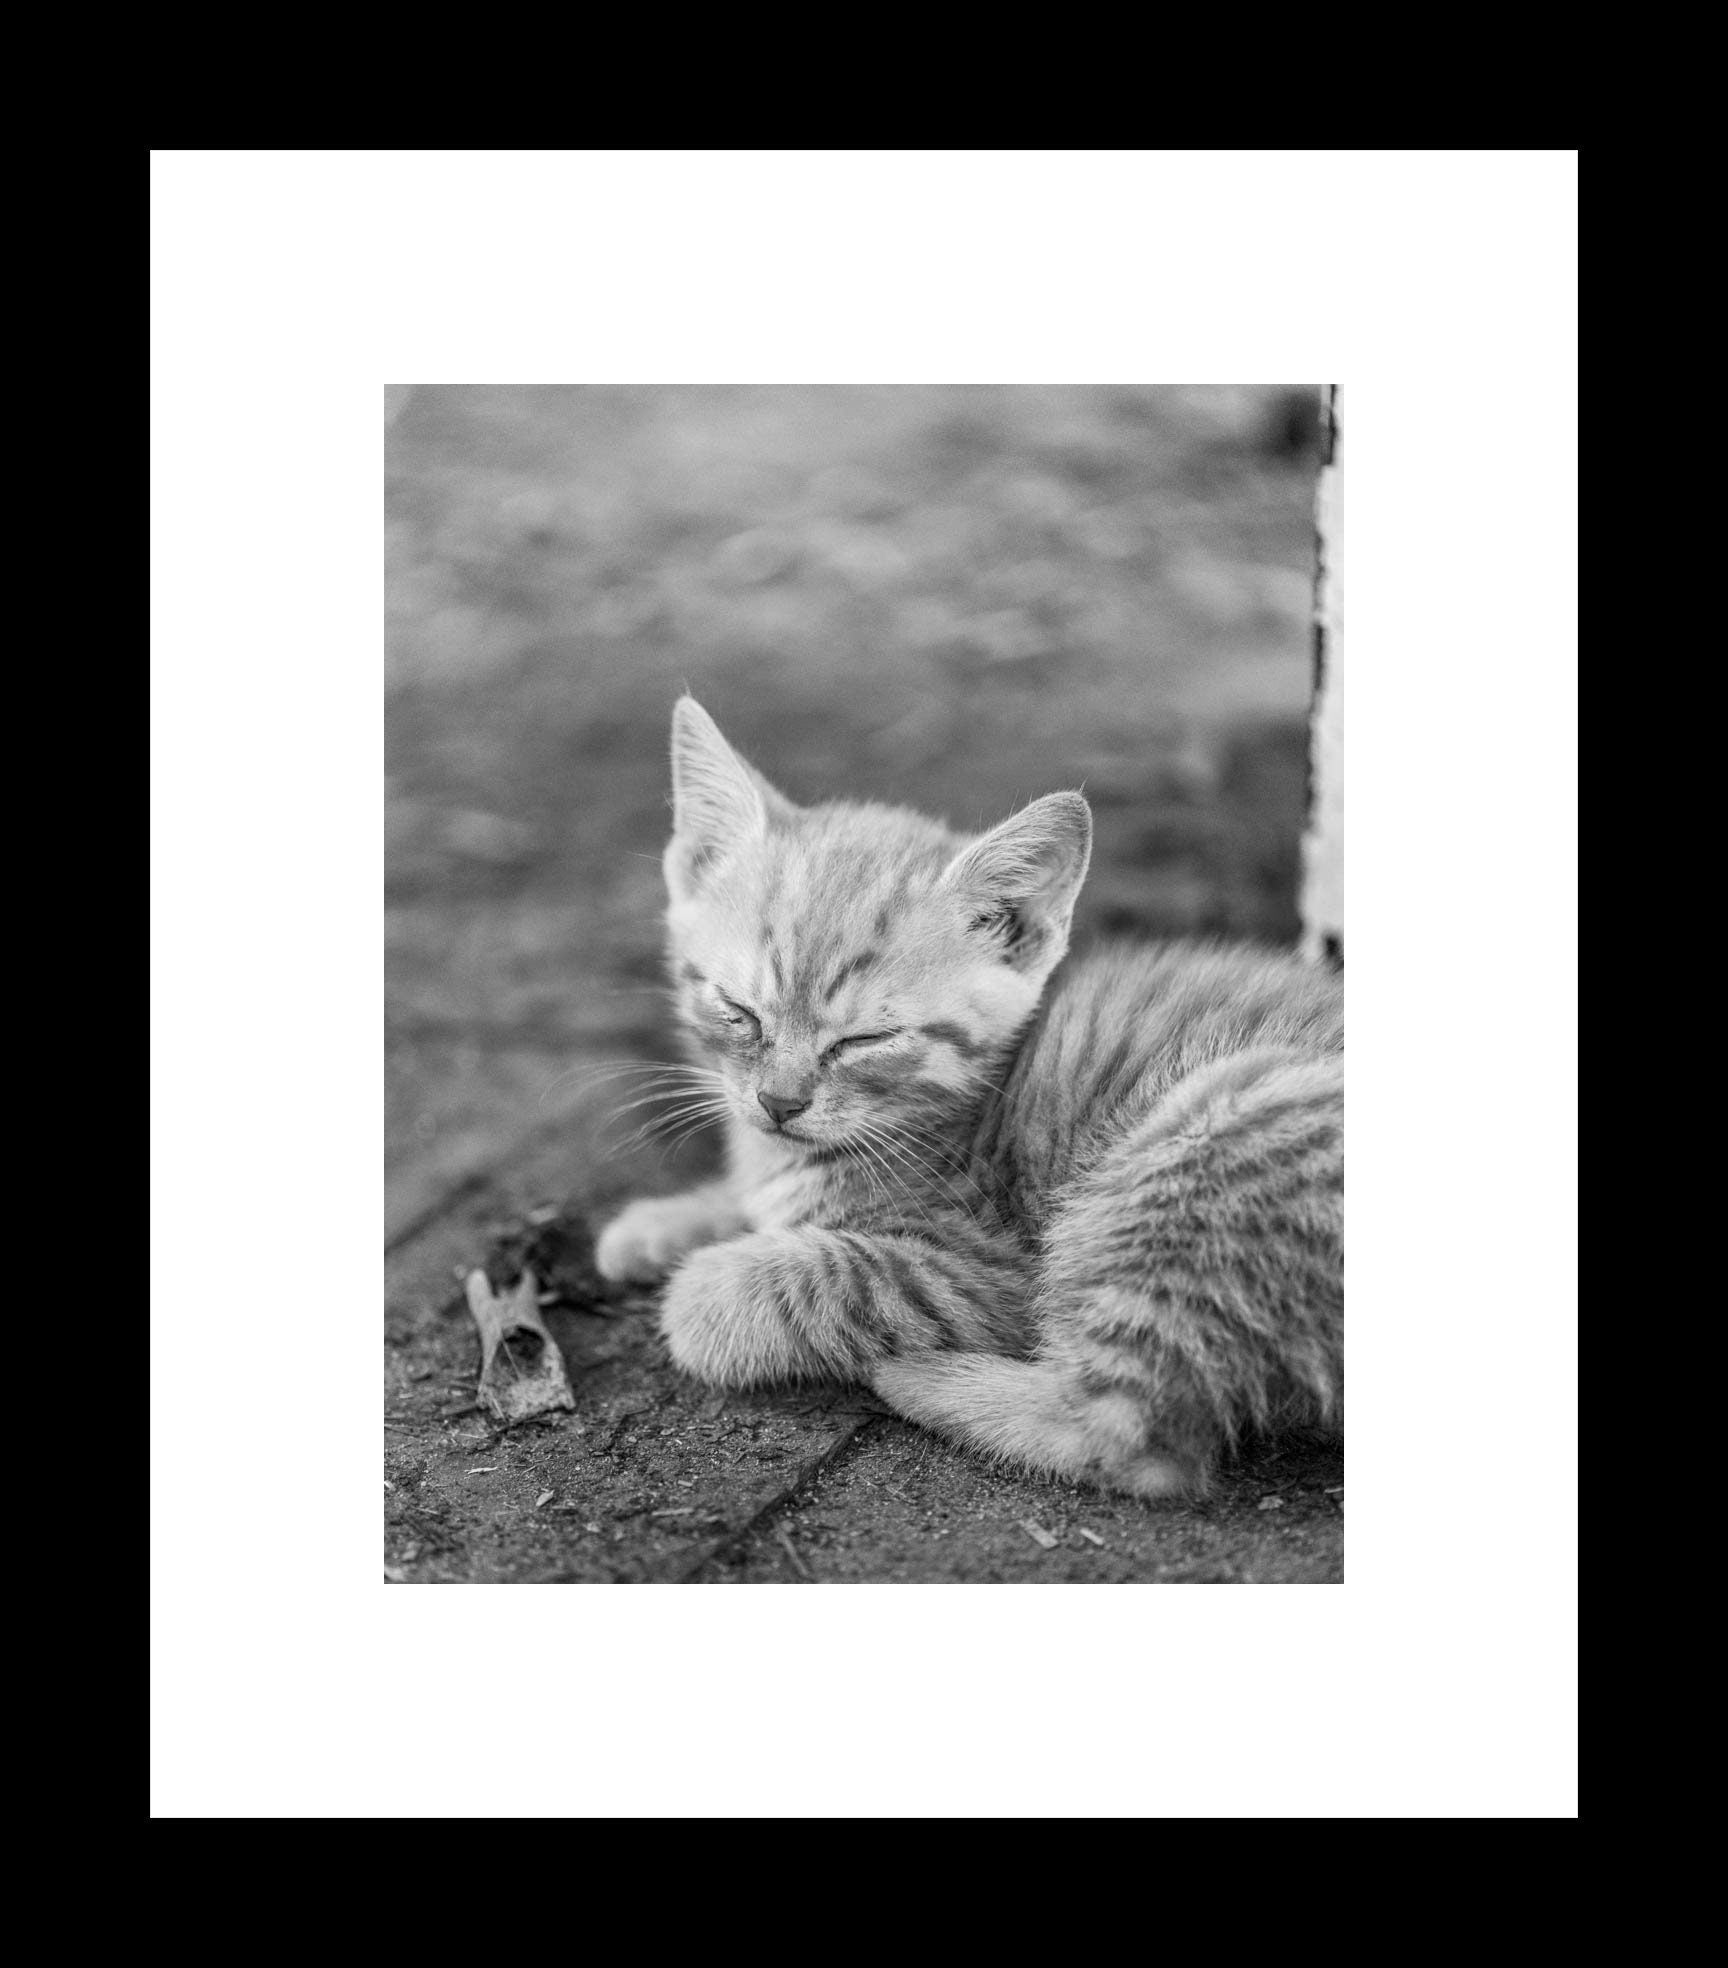 Black and White Barn Kitten Photography Print, Sleepy Cat Canvas Wall Art, Rustic Nursery Decor, Rustic Animal Farmhouse, - eireanneilis